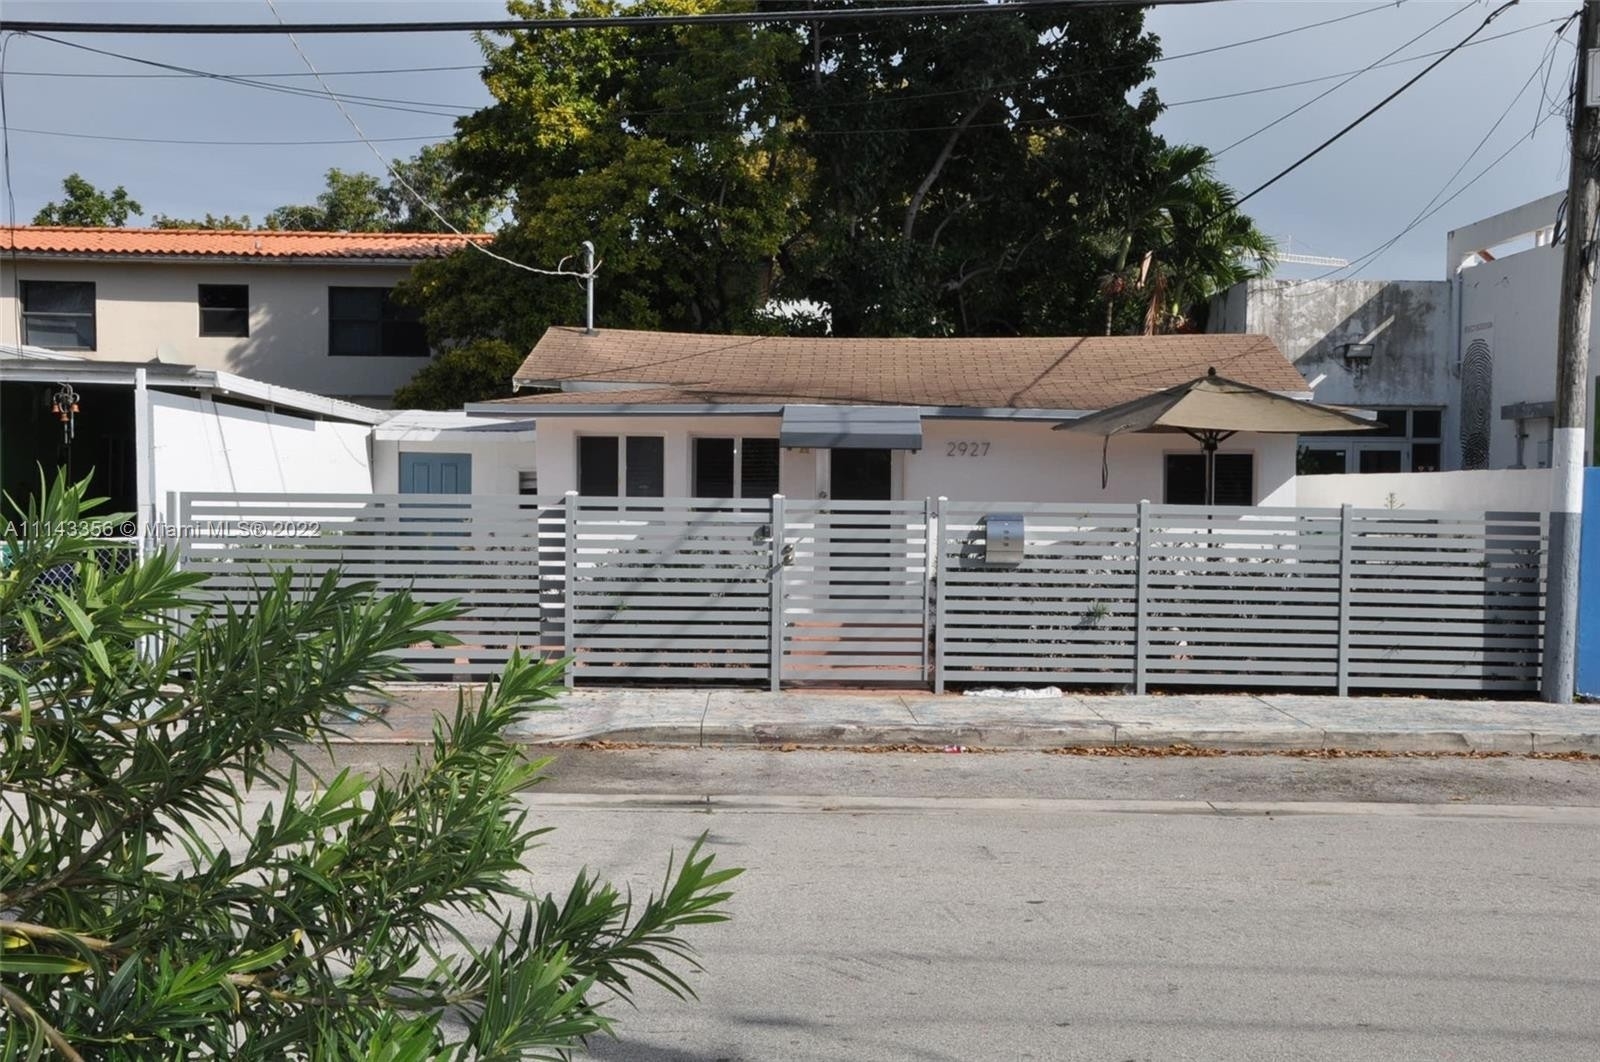 Property at Little San Juan, Miami, FL 33127